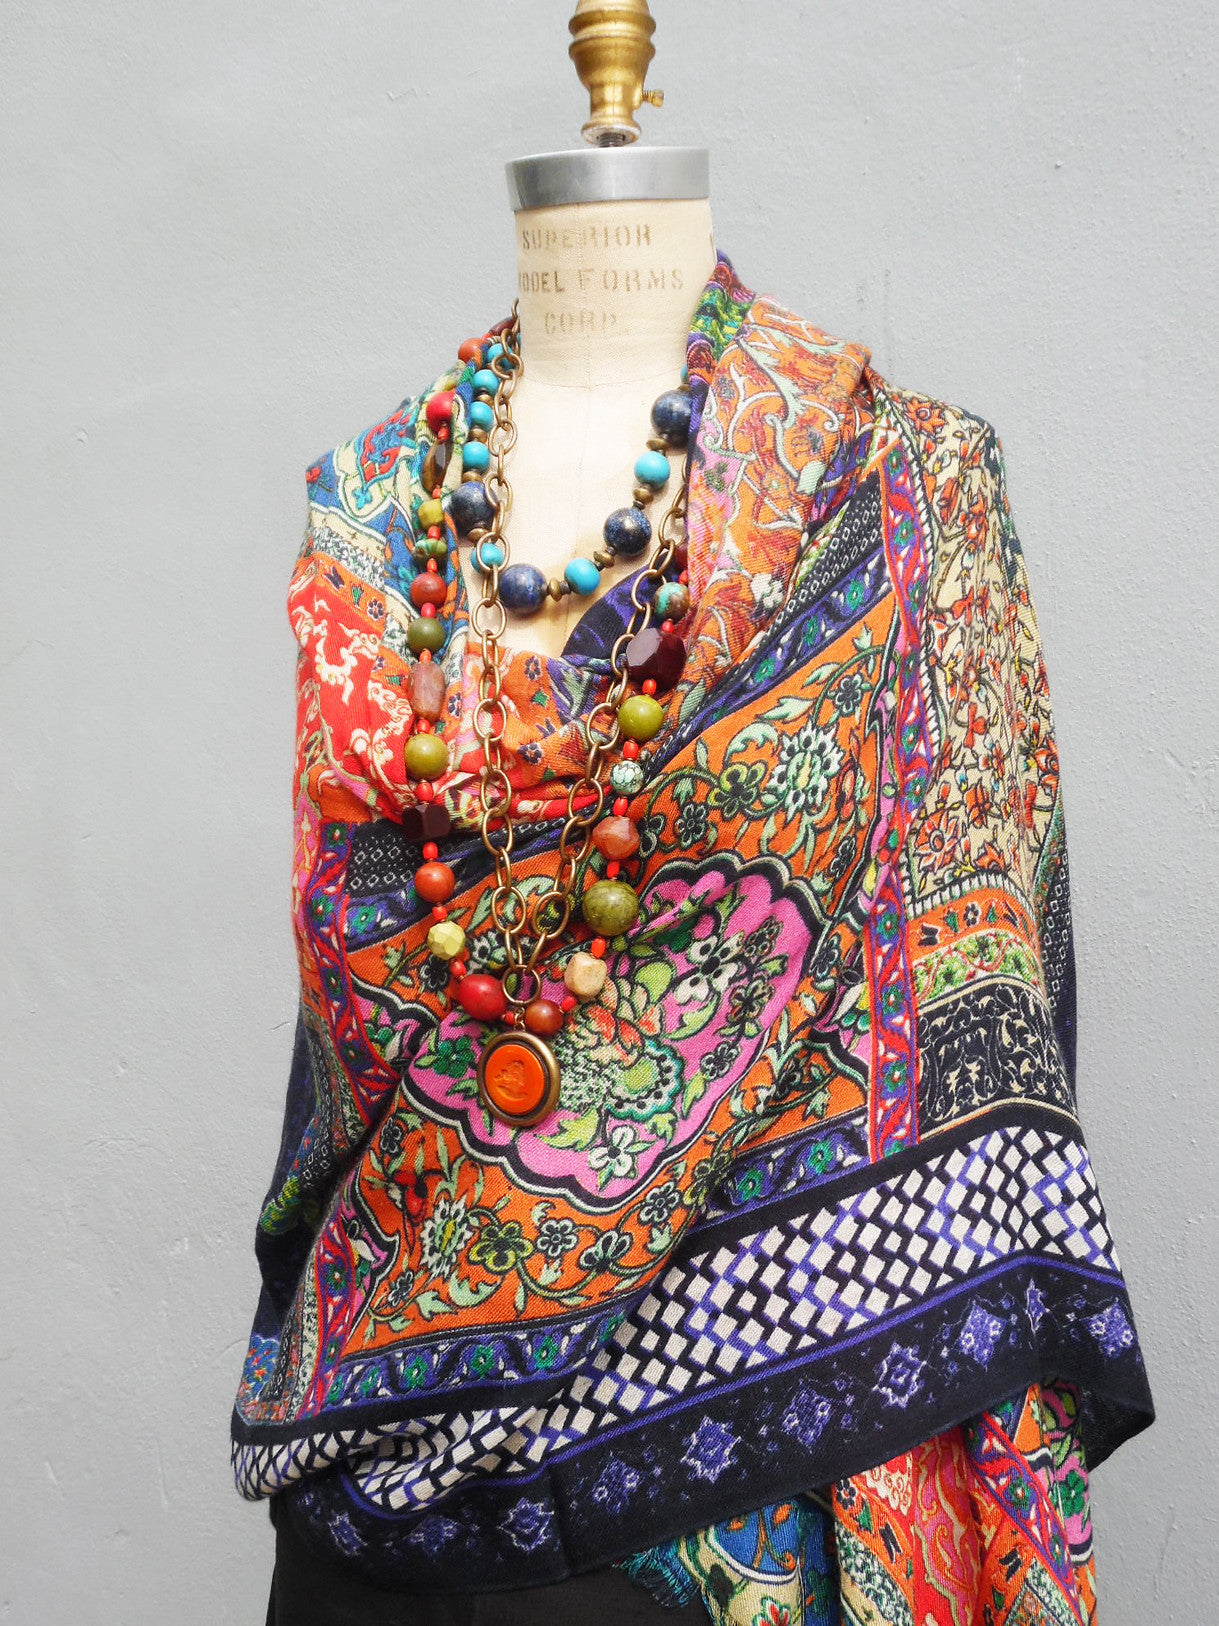 Shawl Silk And Cashmere Art Nouveau